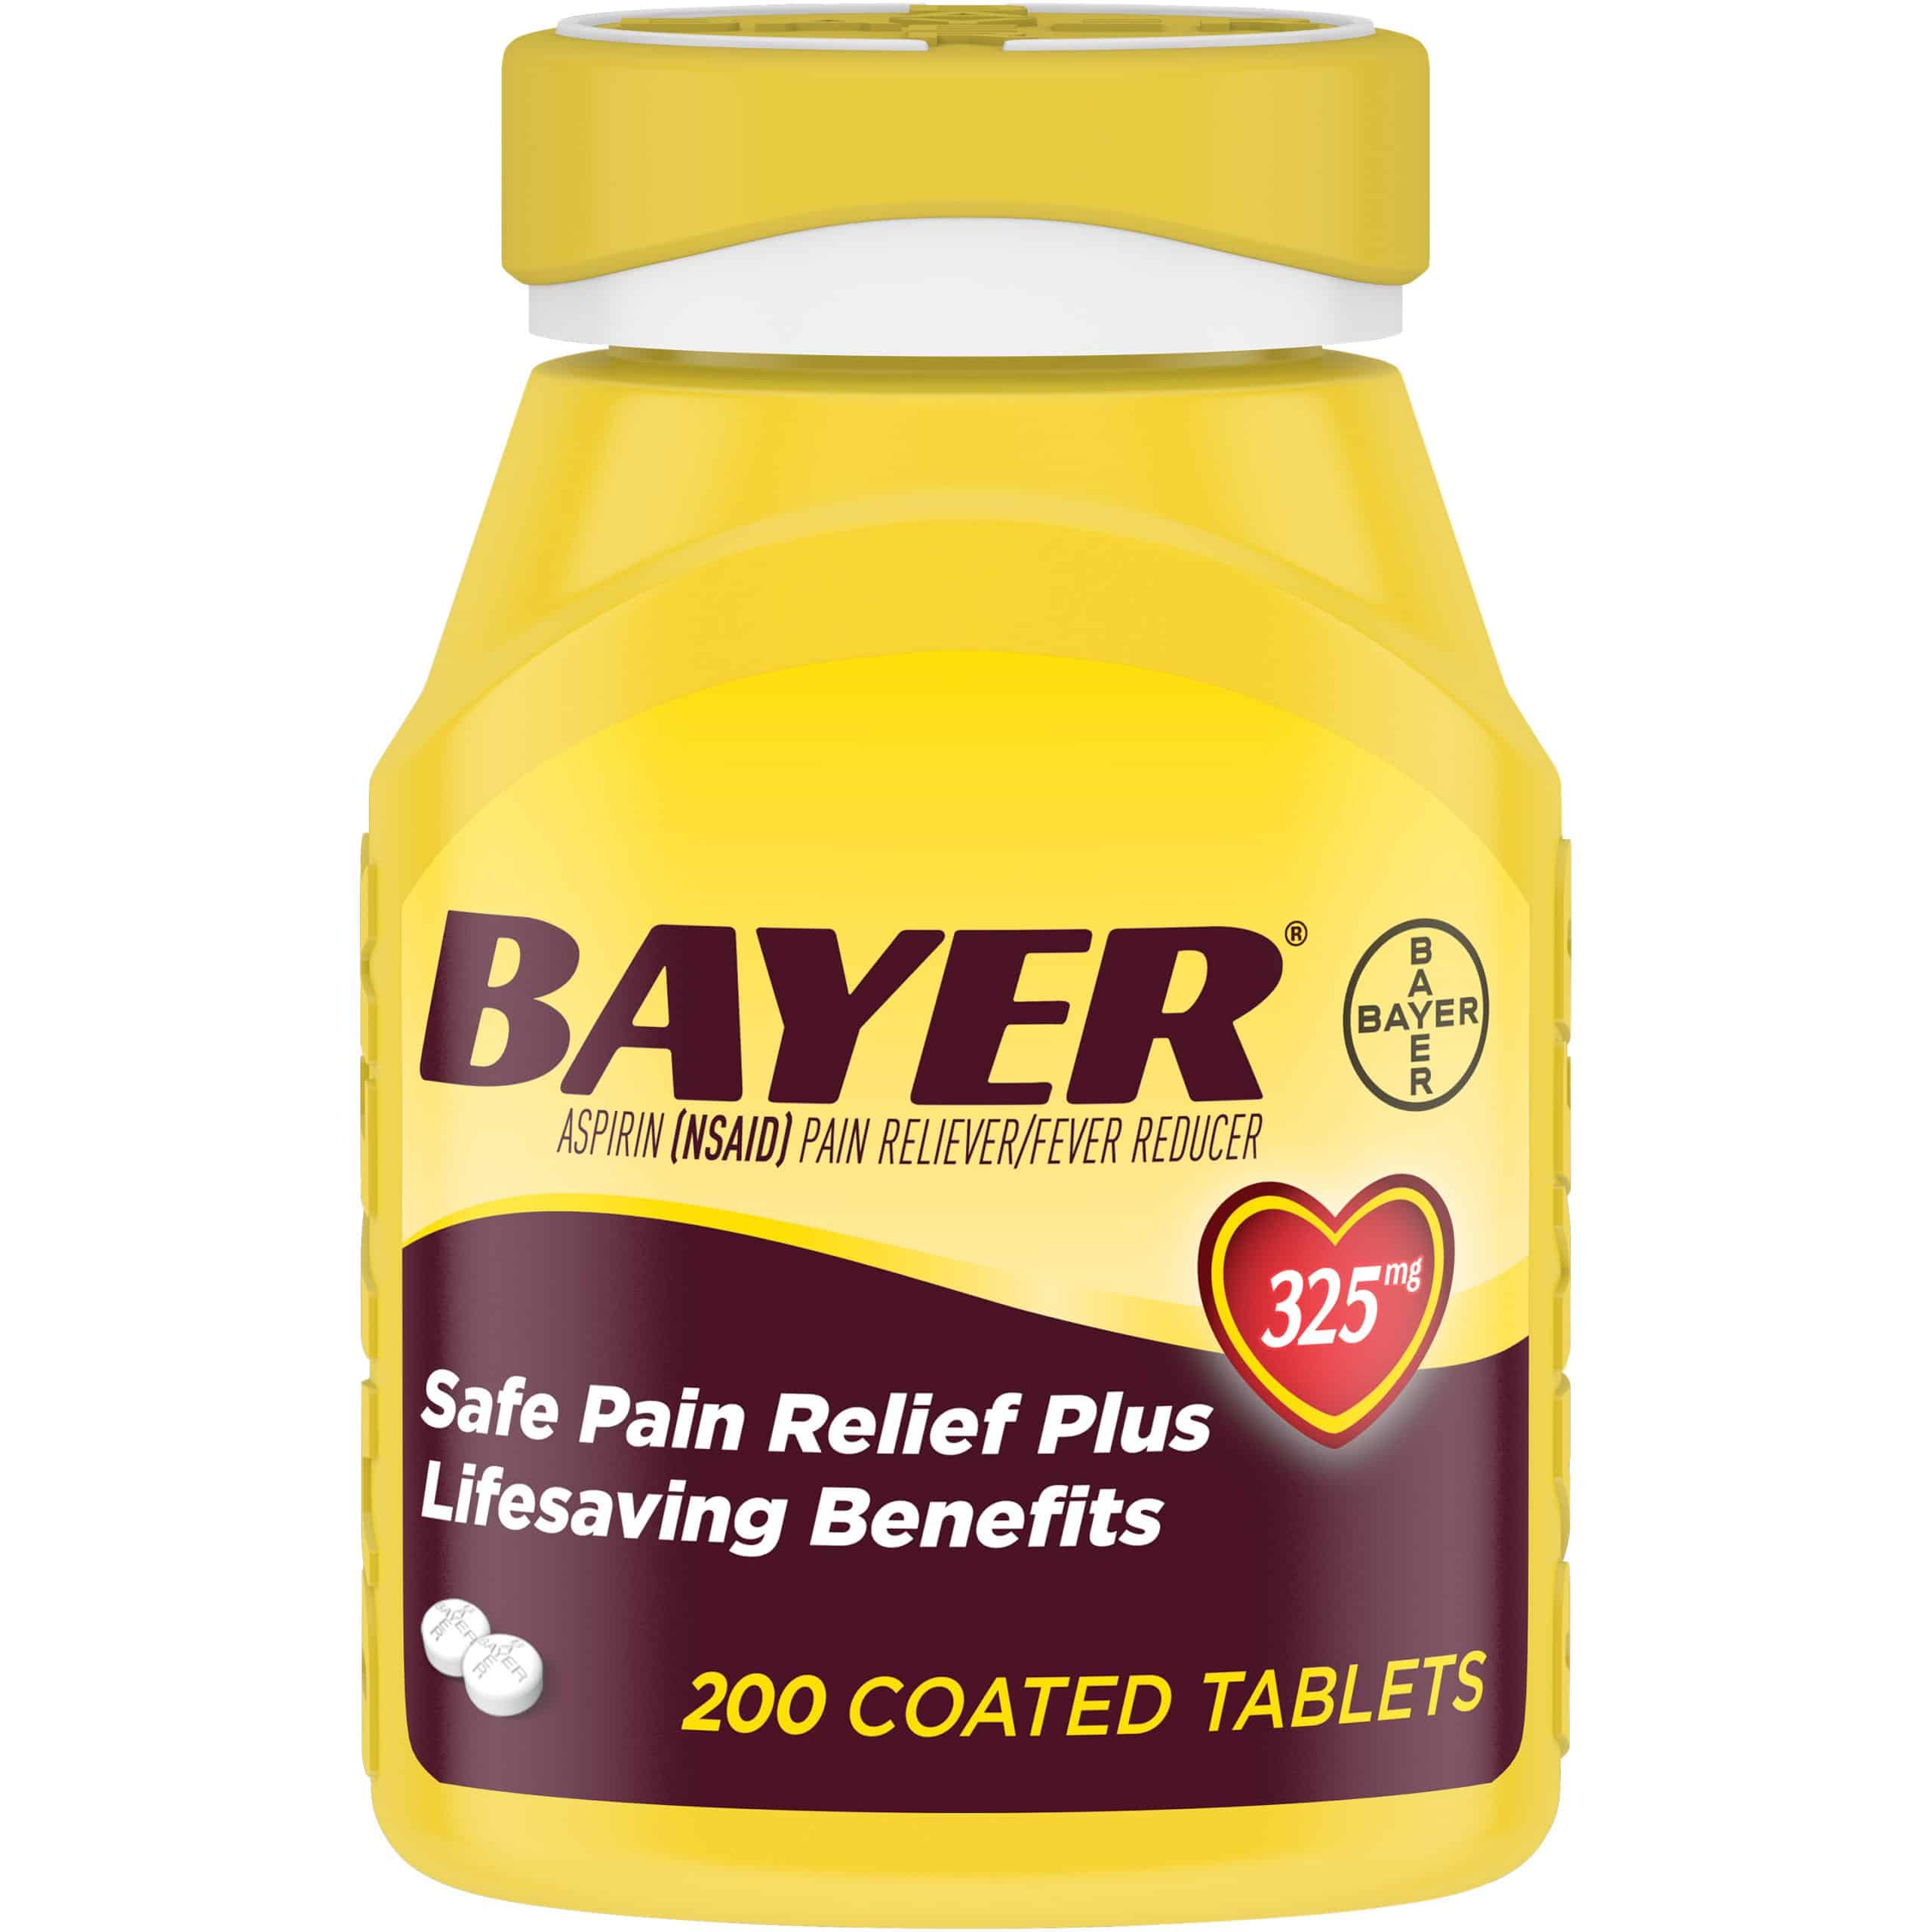 Bayer Pain Reliever Aspirin Bundle